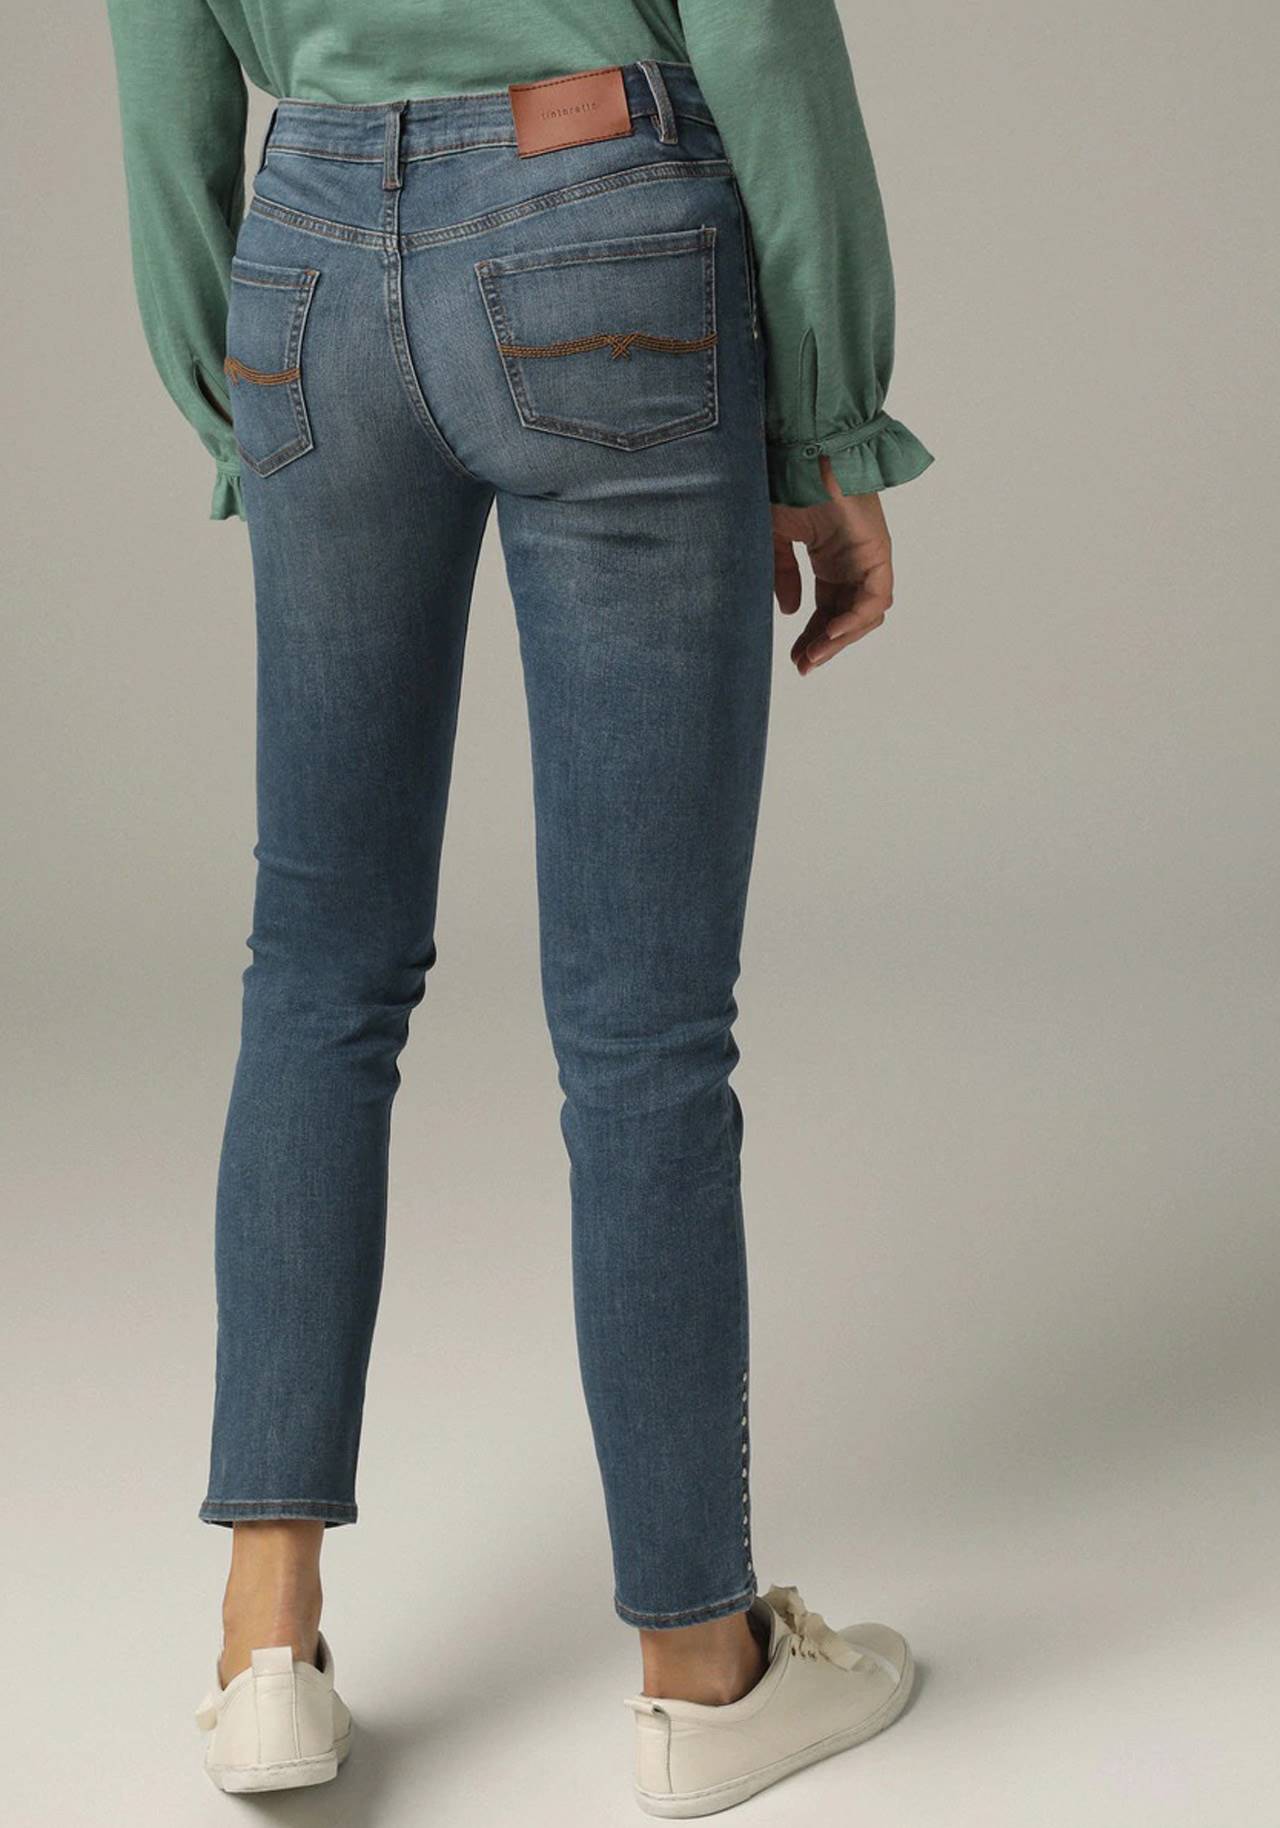 jeans tipazo otoño